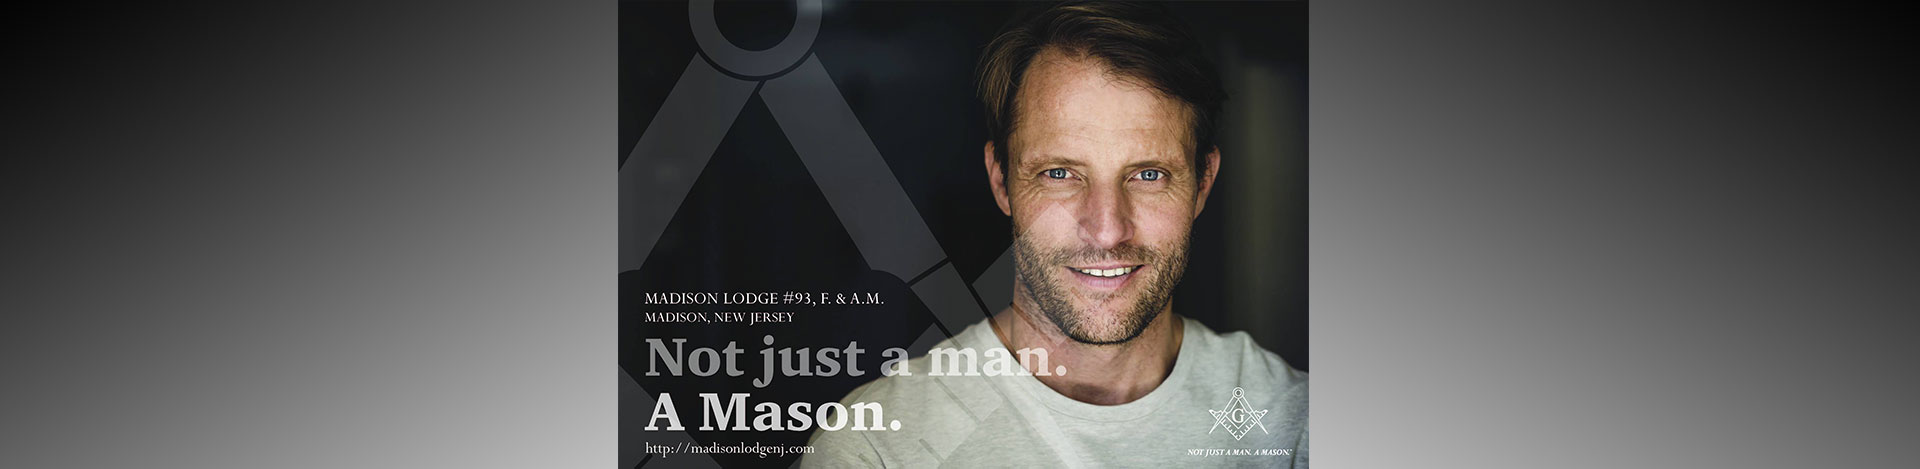 Not Just a Man. A Mason.